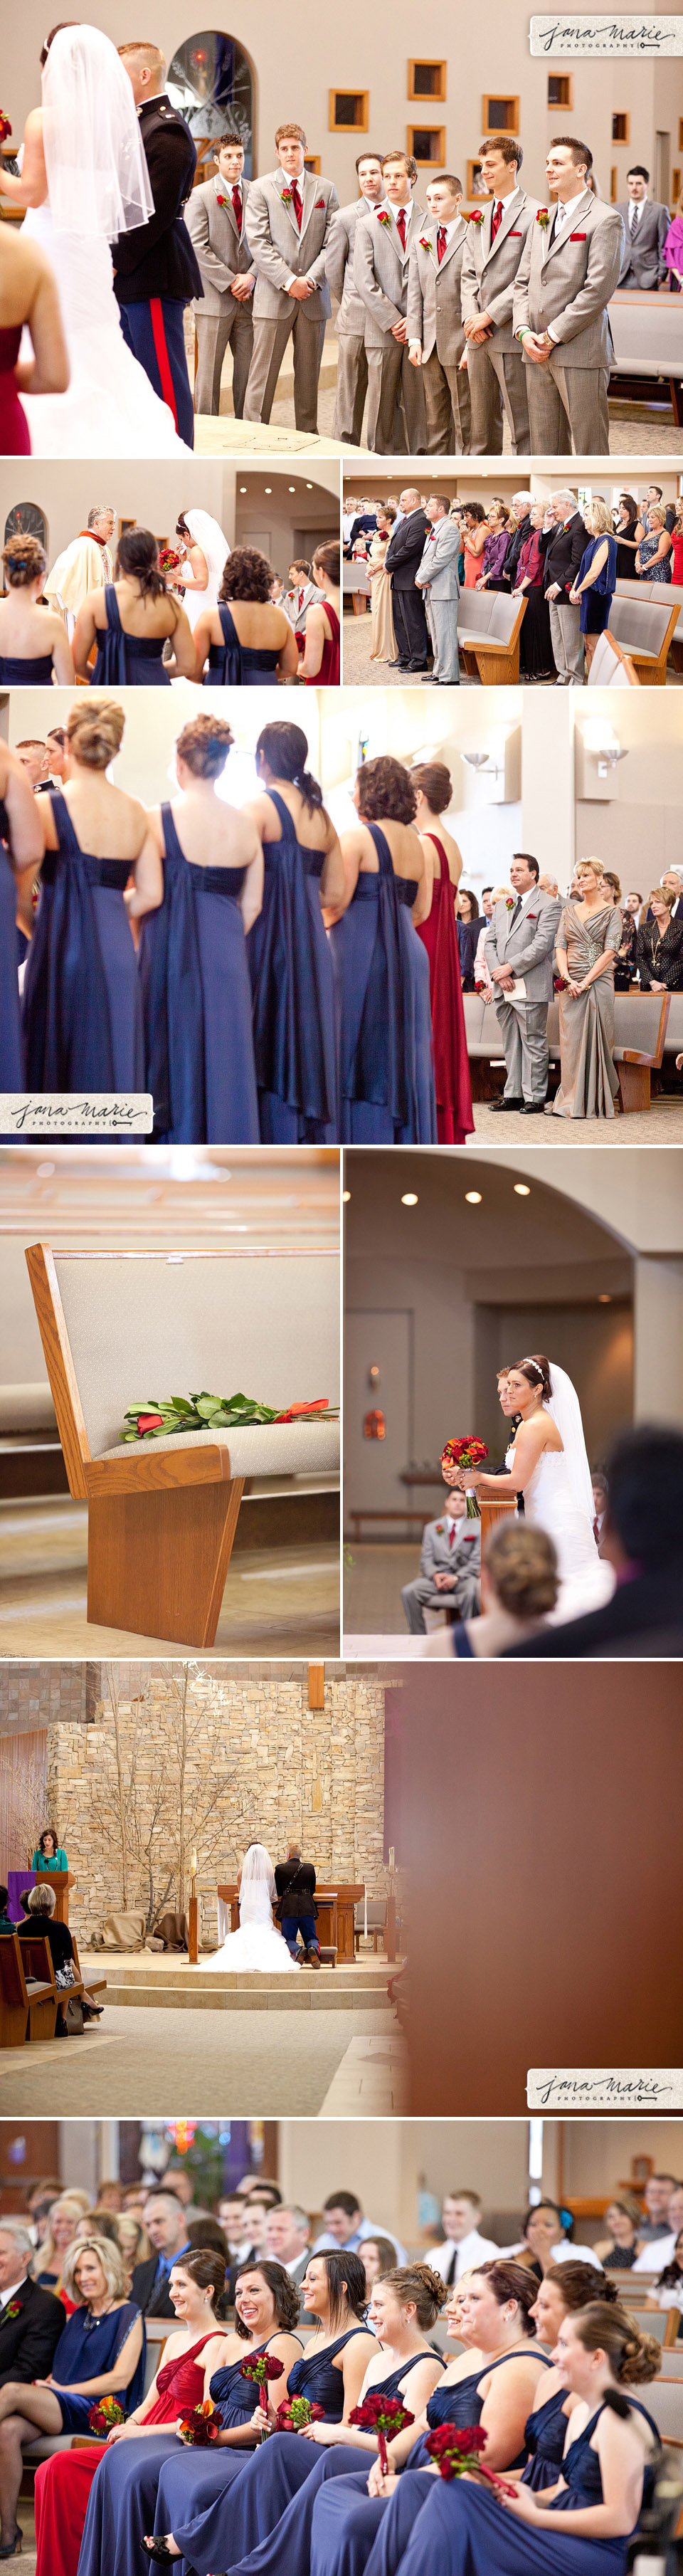 Ceremonies, Kansas City weddings, Blue dress, Mother of the groom, tears, love, spring